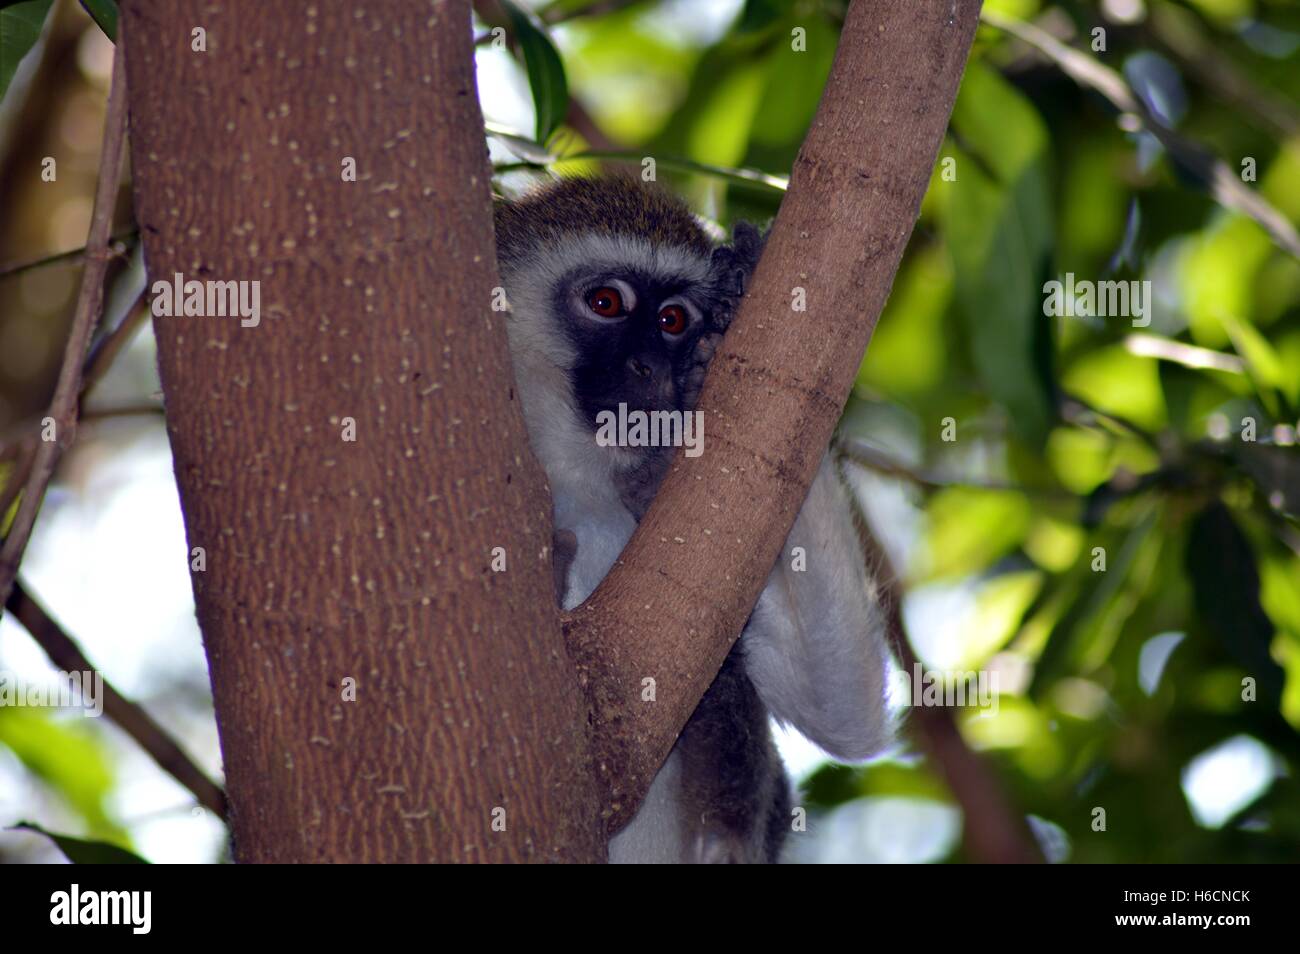 Small gray and black monkey on a tree on a tree Stock Photo